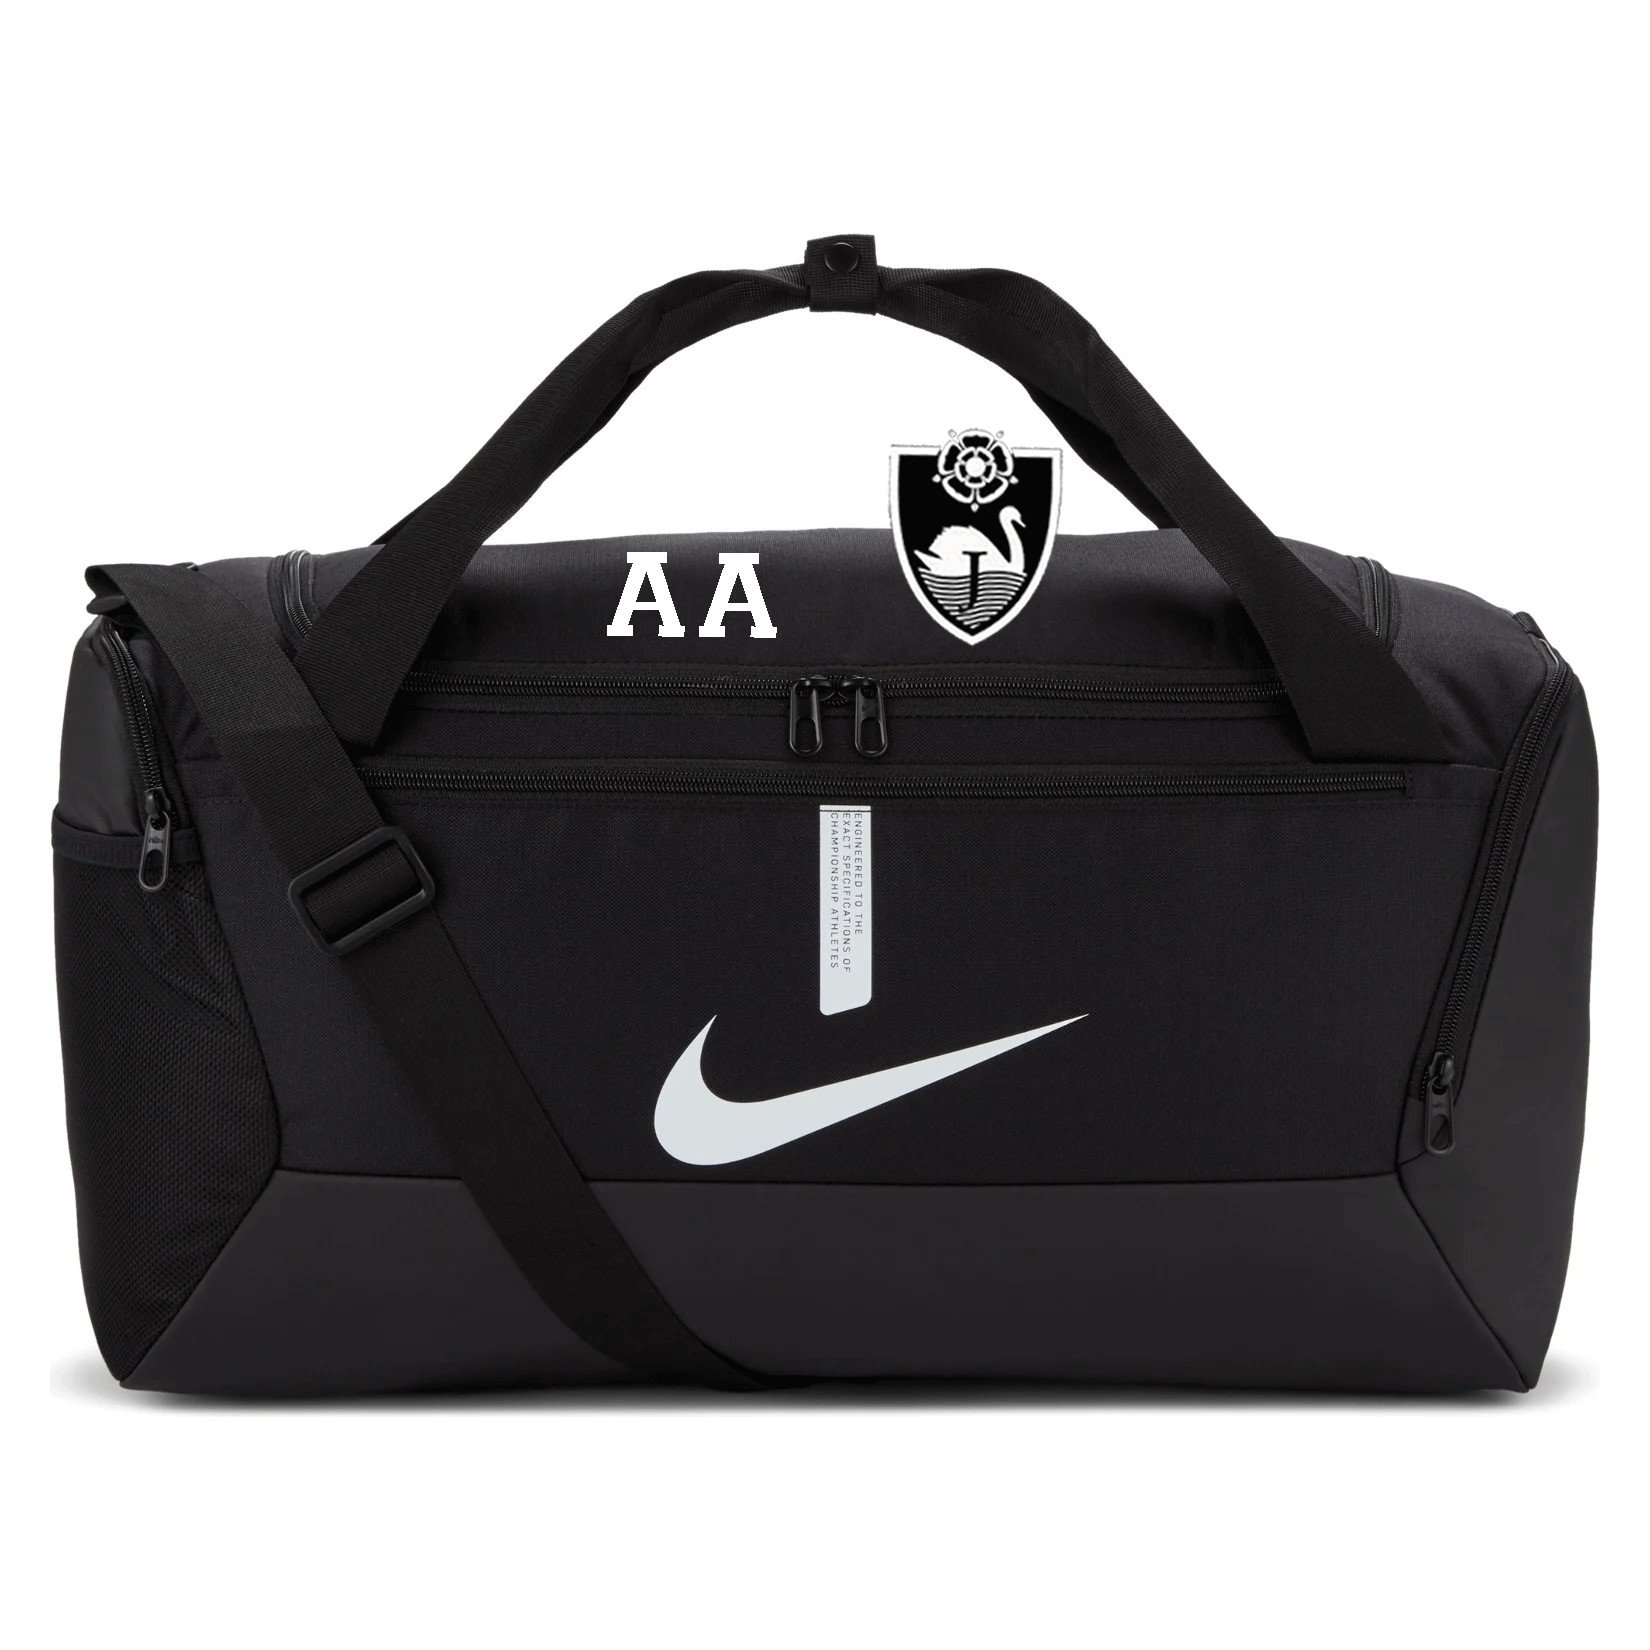 Nike Academy Team Duffel Bag (Small)